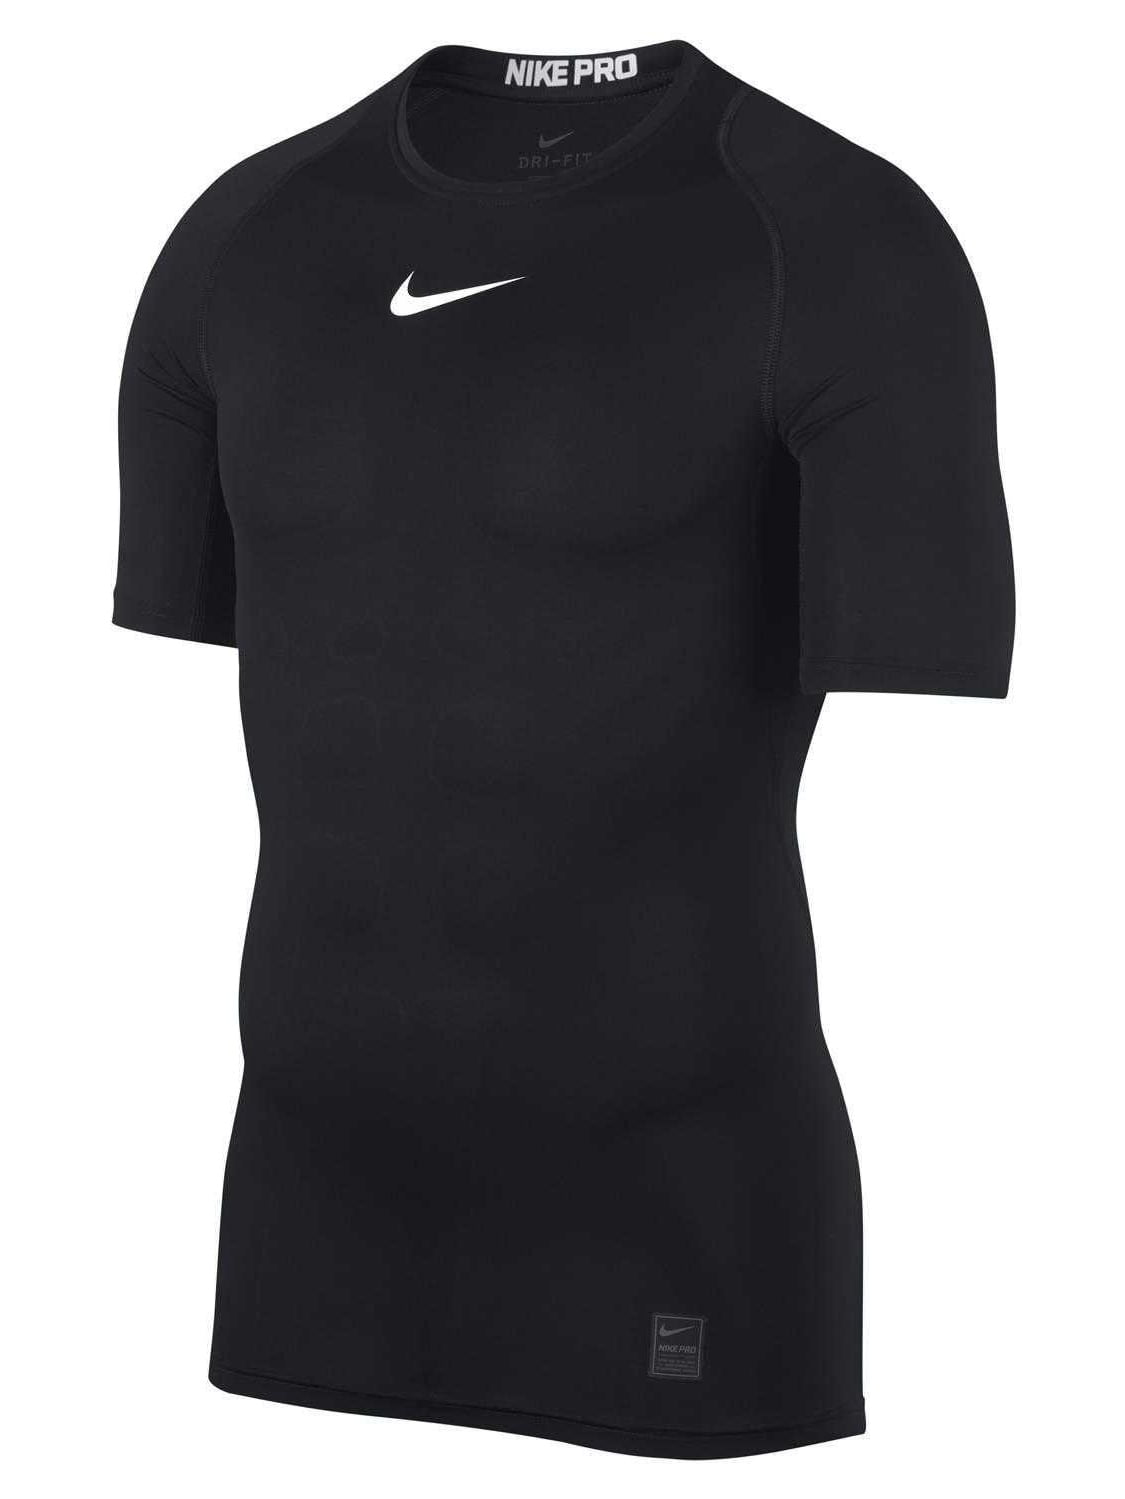 Nike Men's Pro Short Sleeve Training Top 838091-010 Black